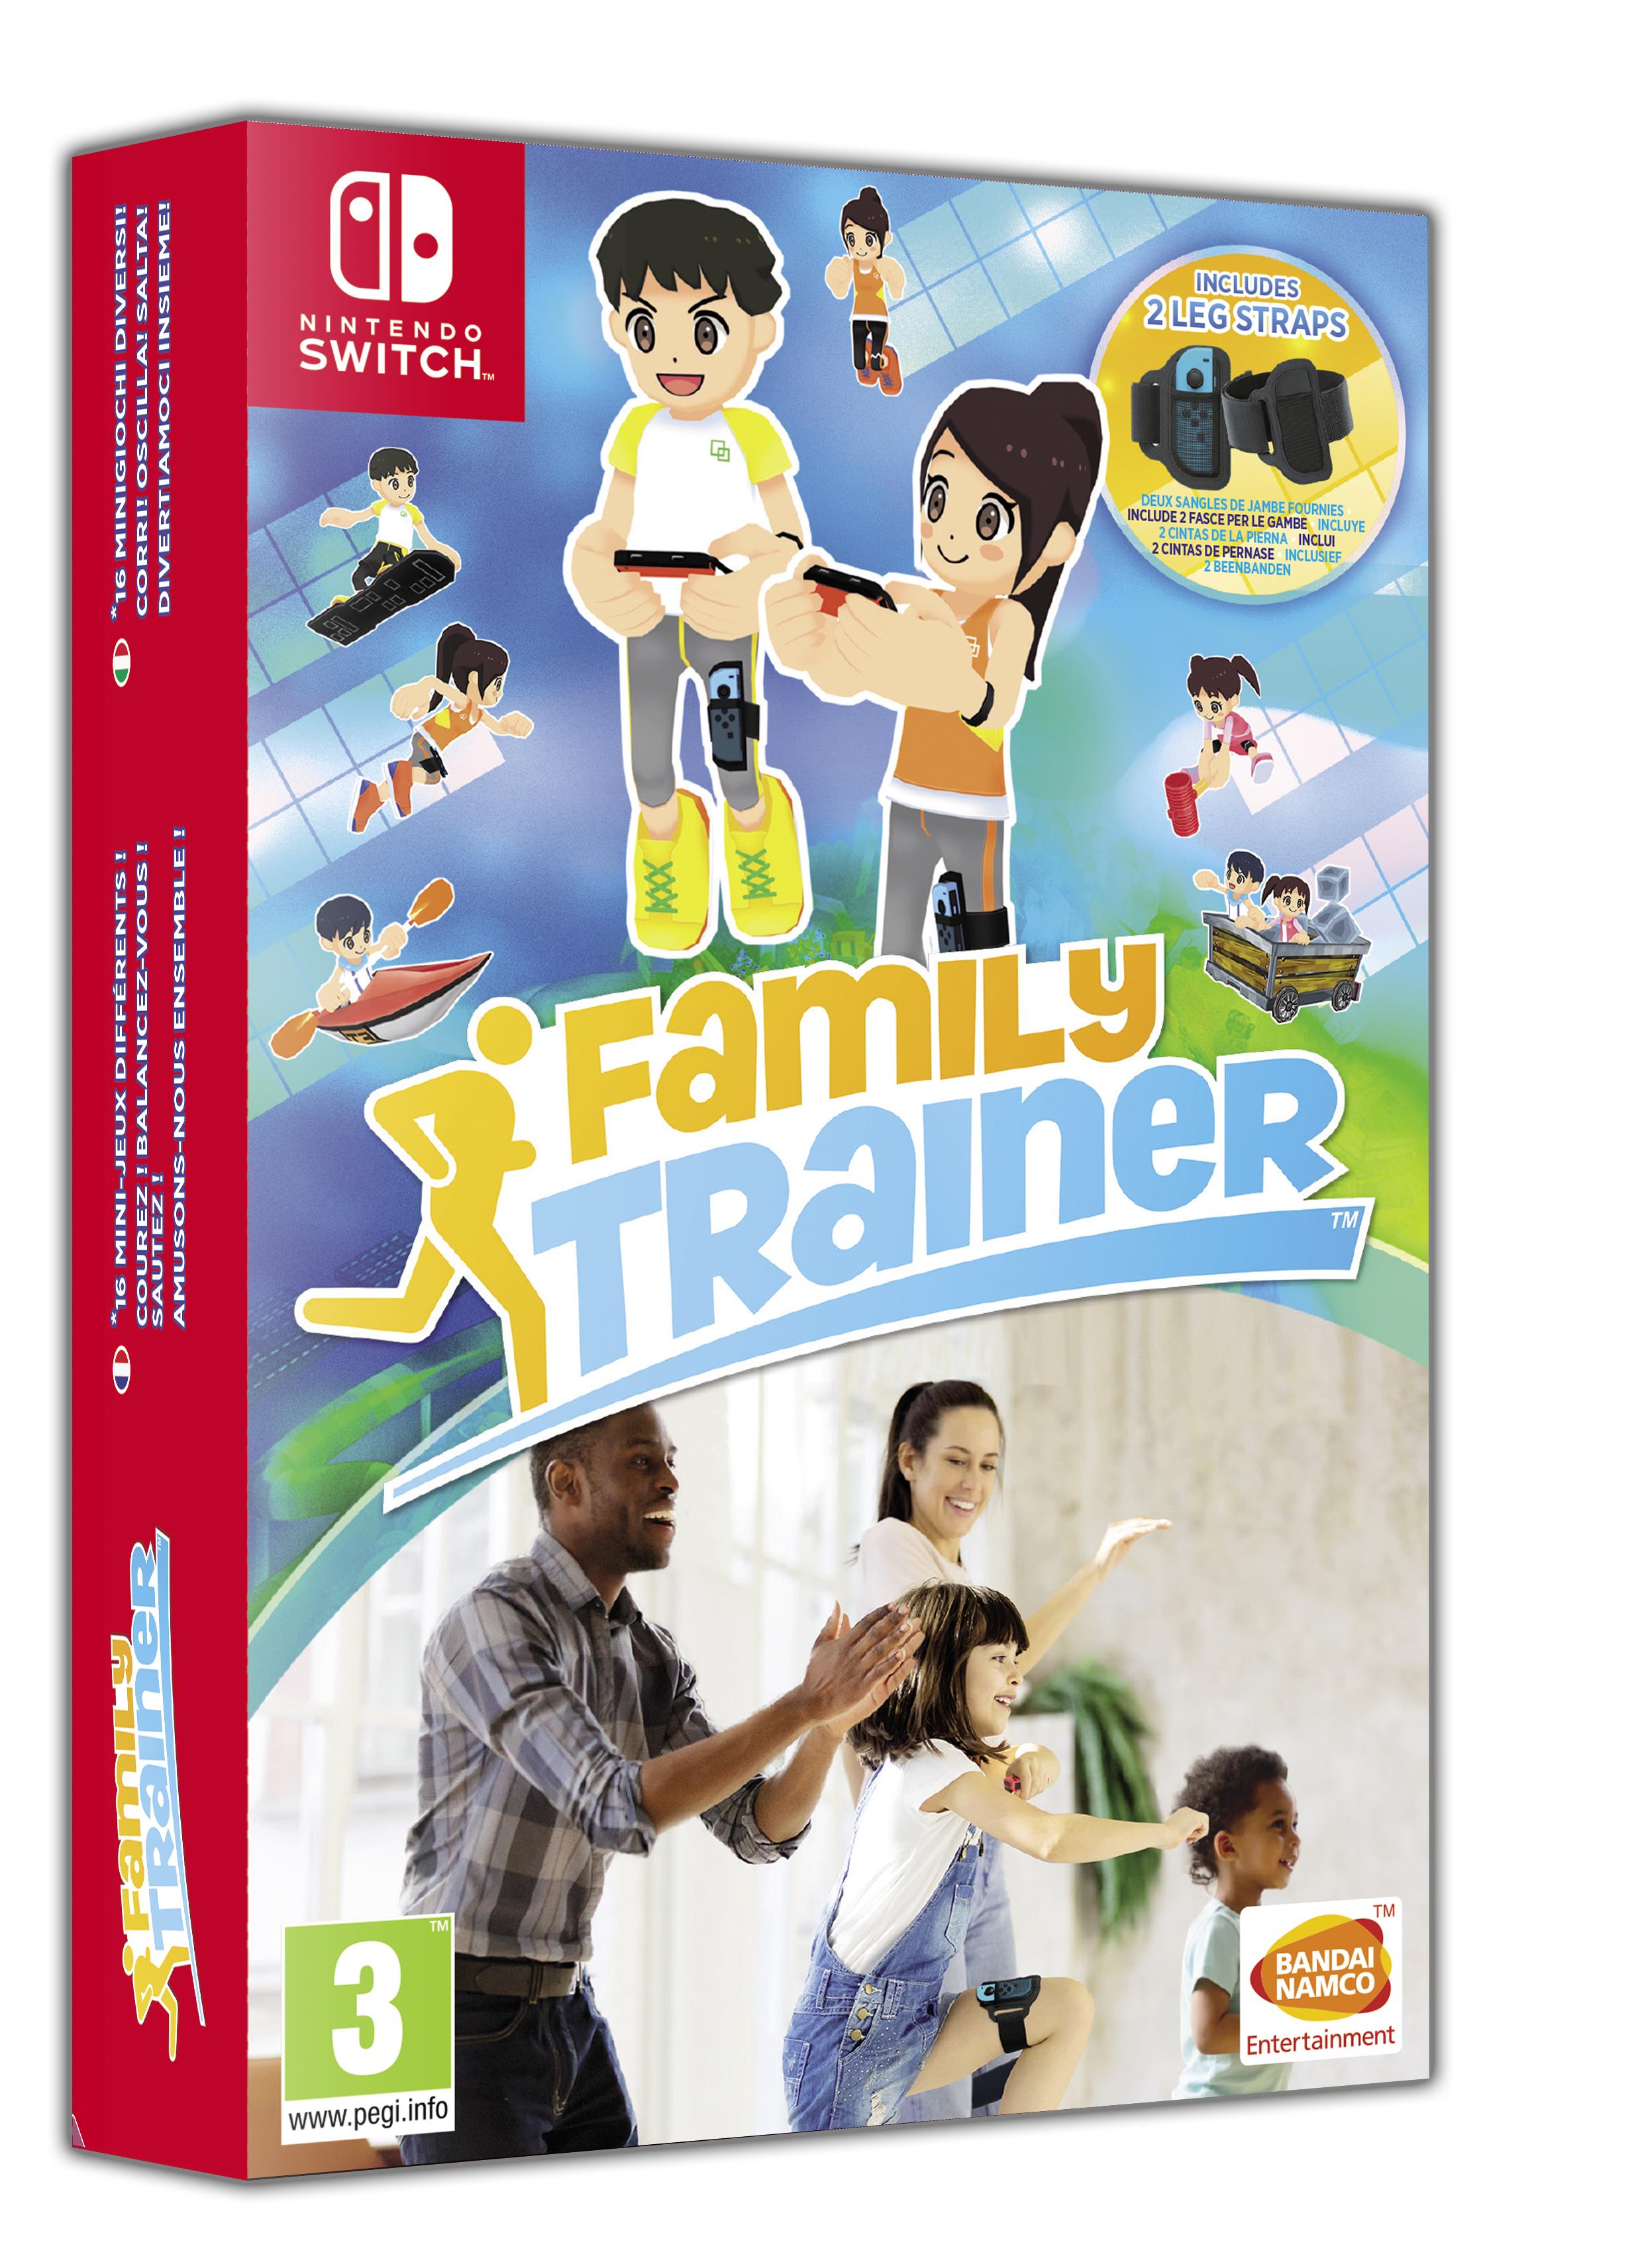 Namco Bandai Family Trainer